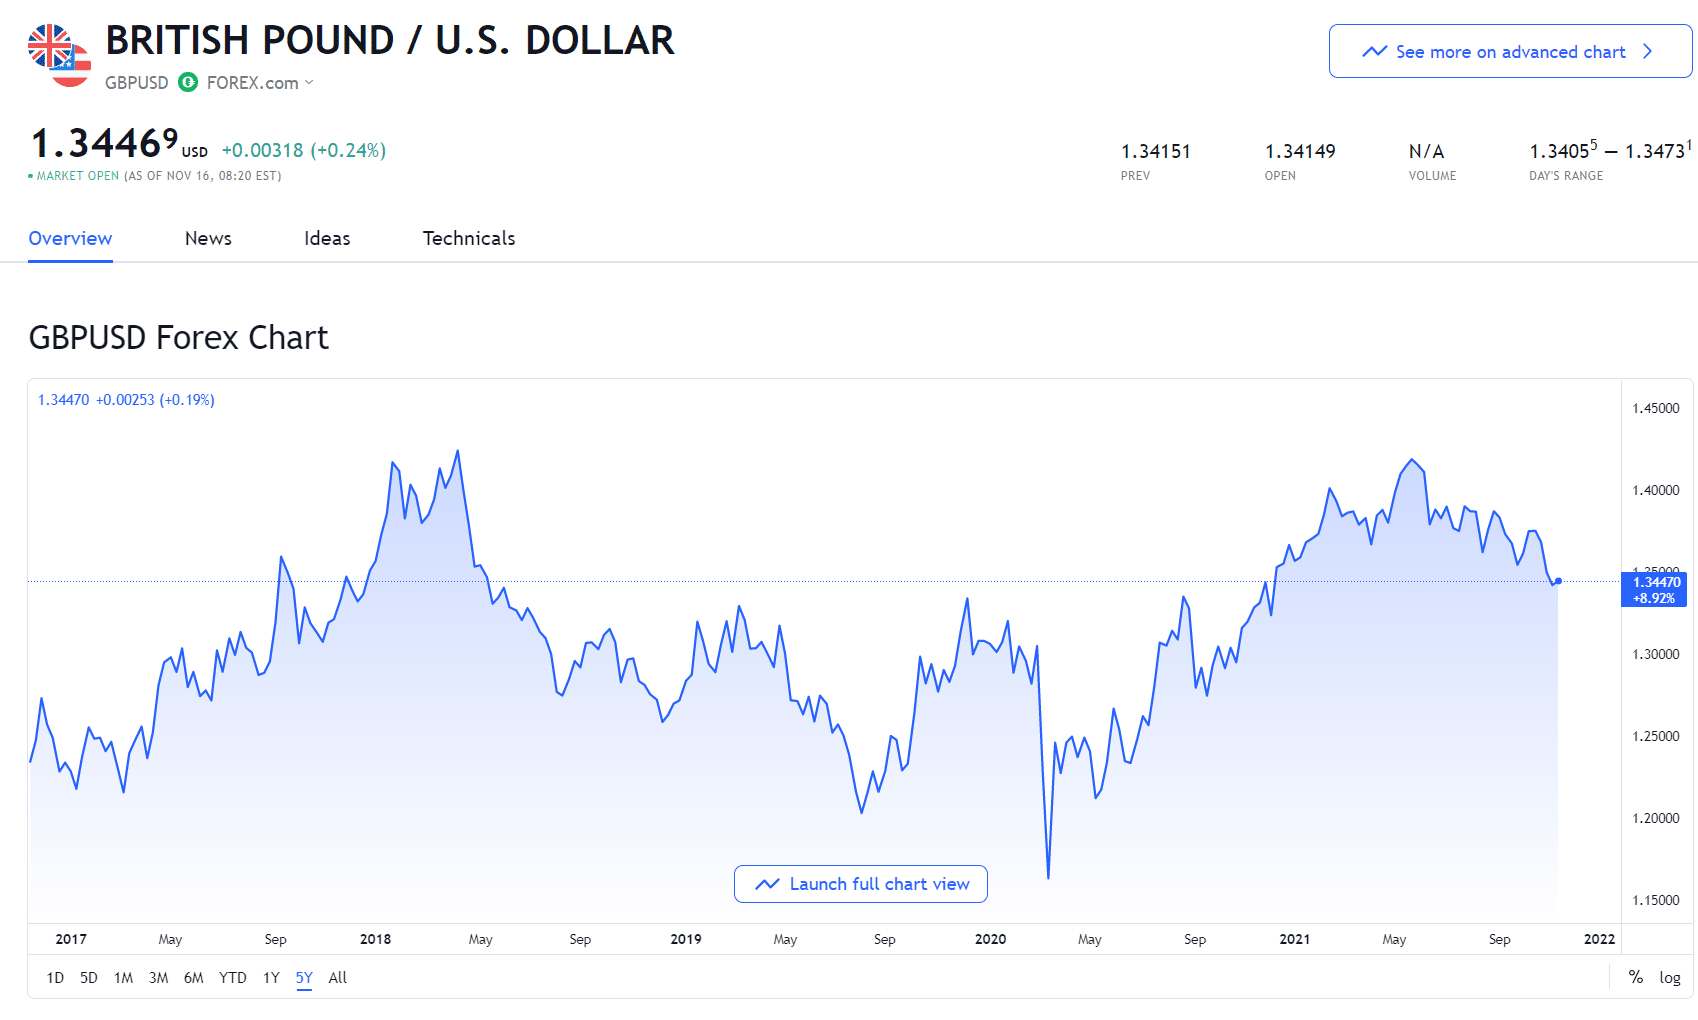 GBP/USD chart